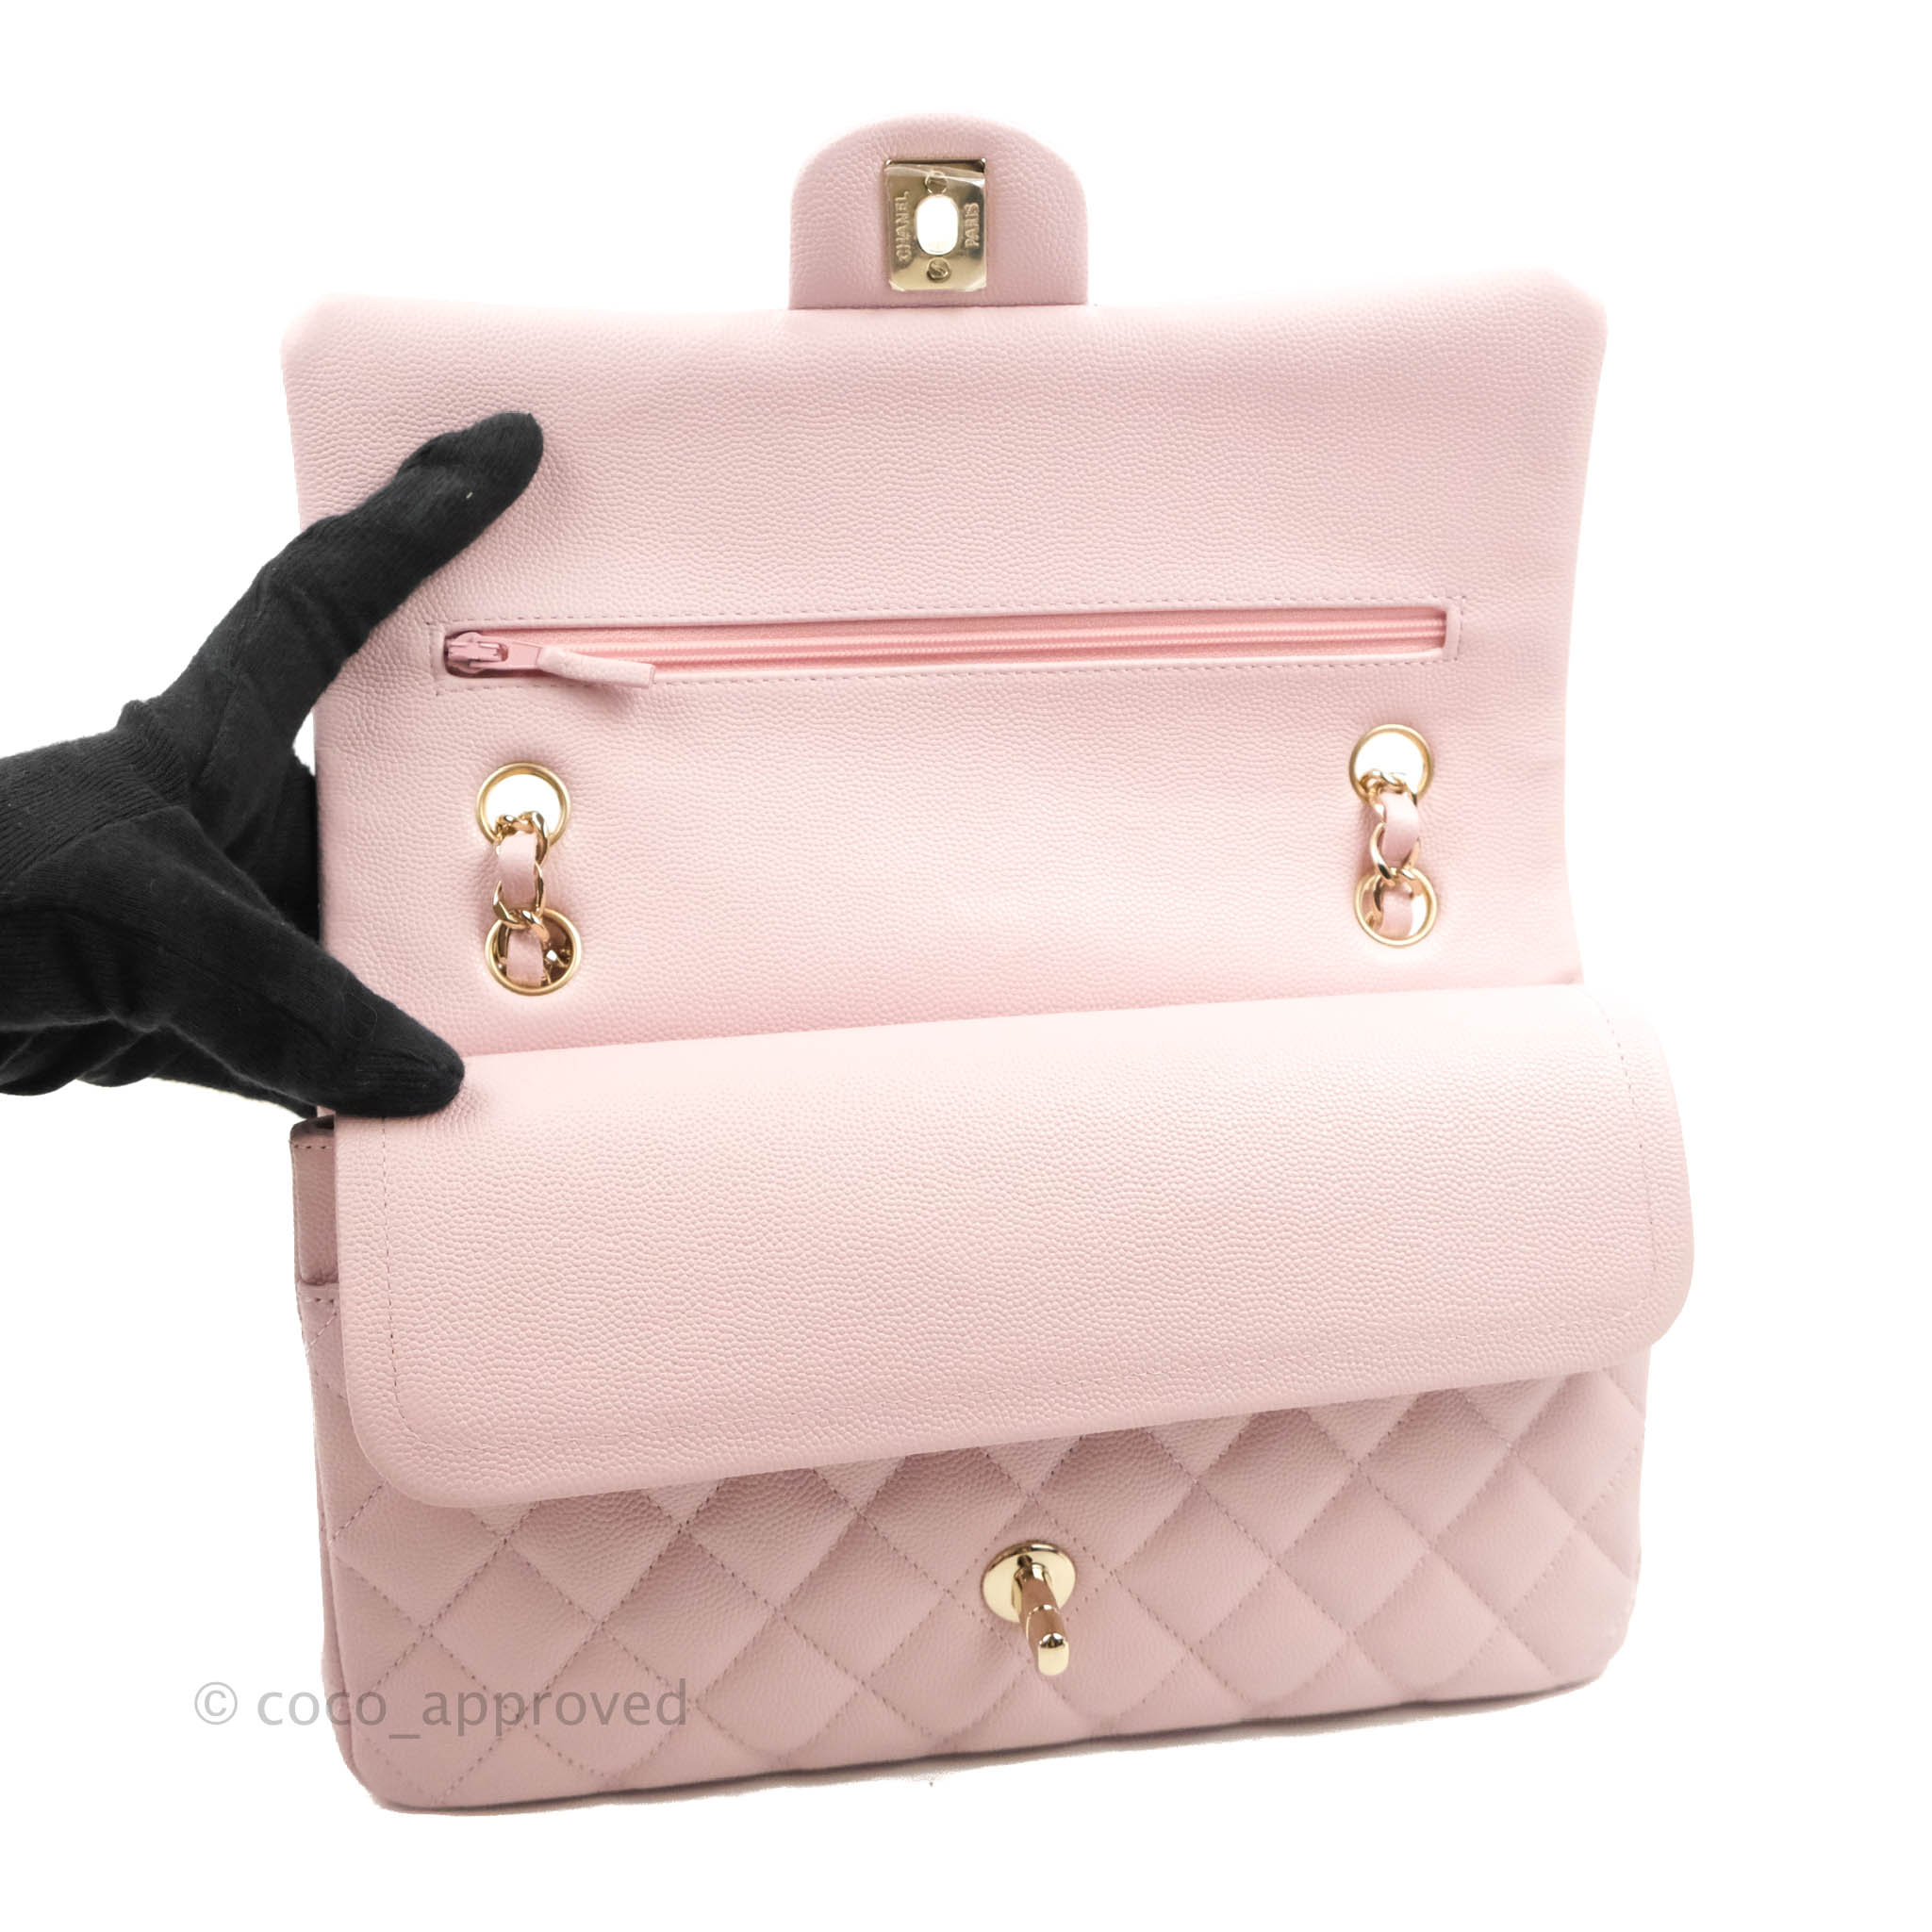 Chanel M/L Medium Double Flap Bag Lilac Rose Clair Caviar Gold